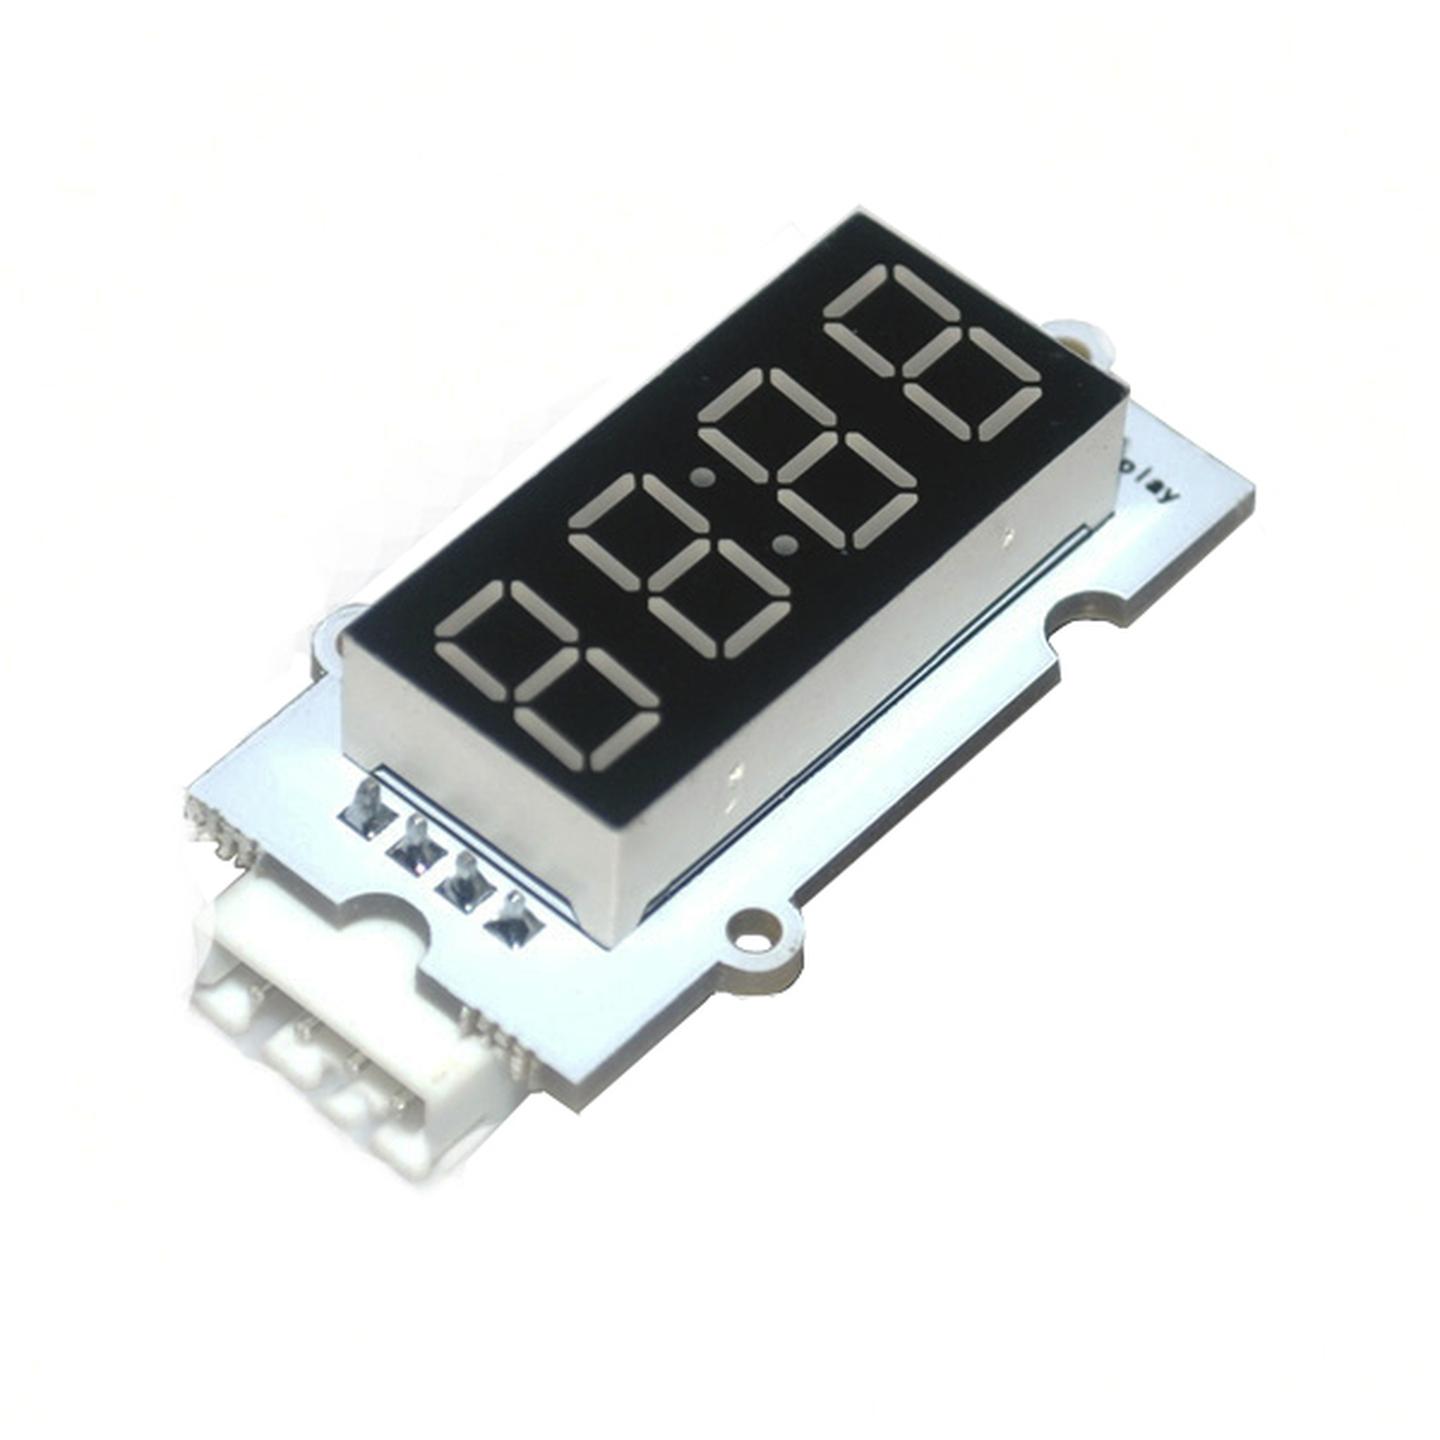 Linker 4-Digit 7-Segment Module for Arduino